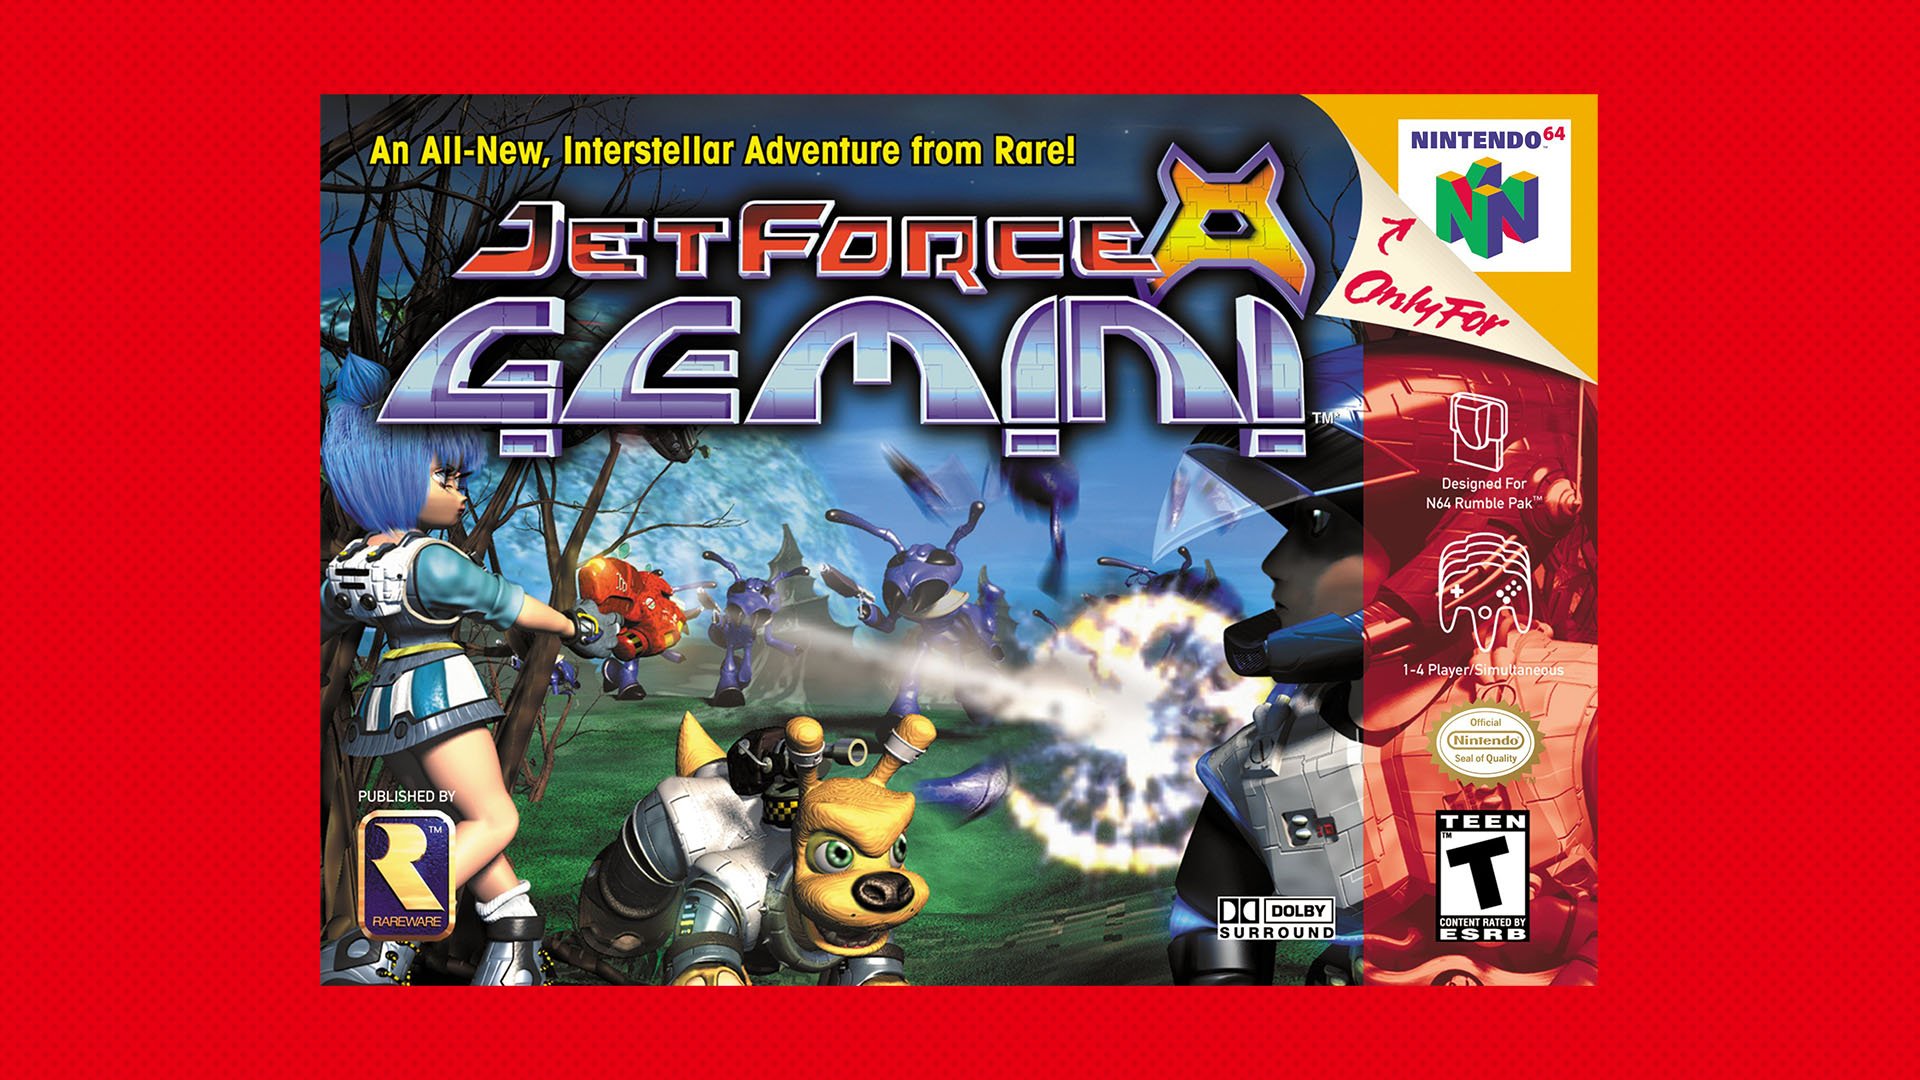 Nintendo 64 - Nintendo Switch Online adds Jet Force Gemini in 